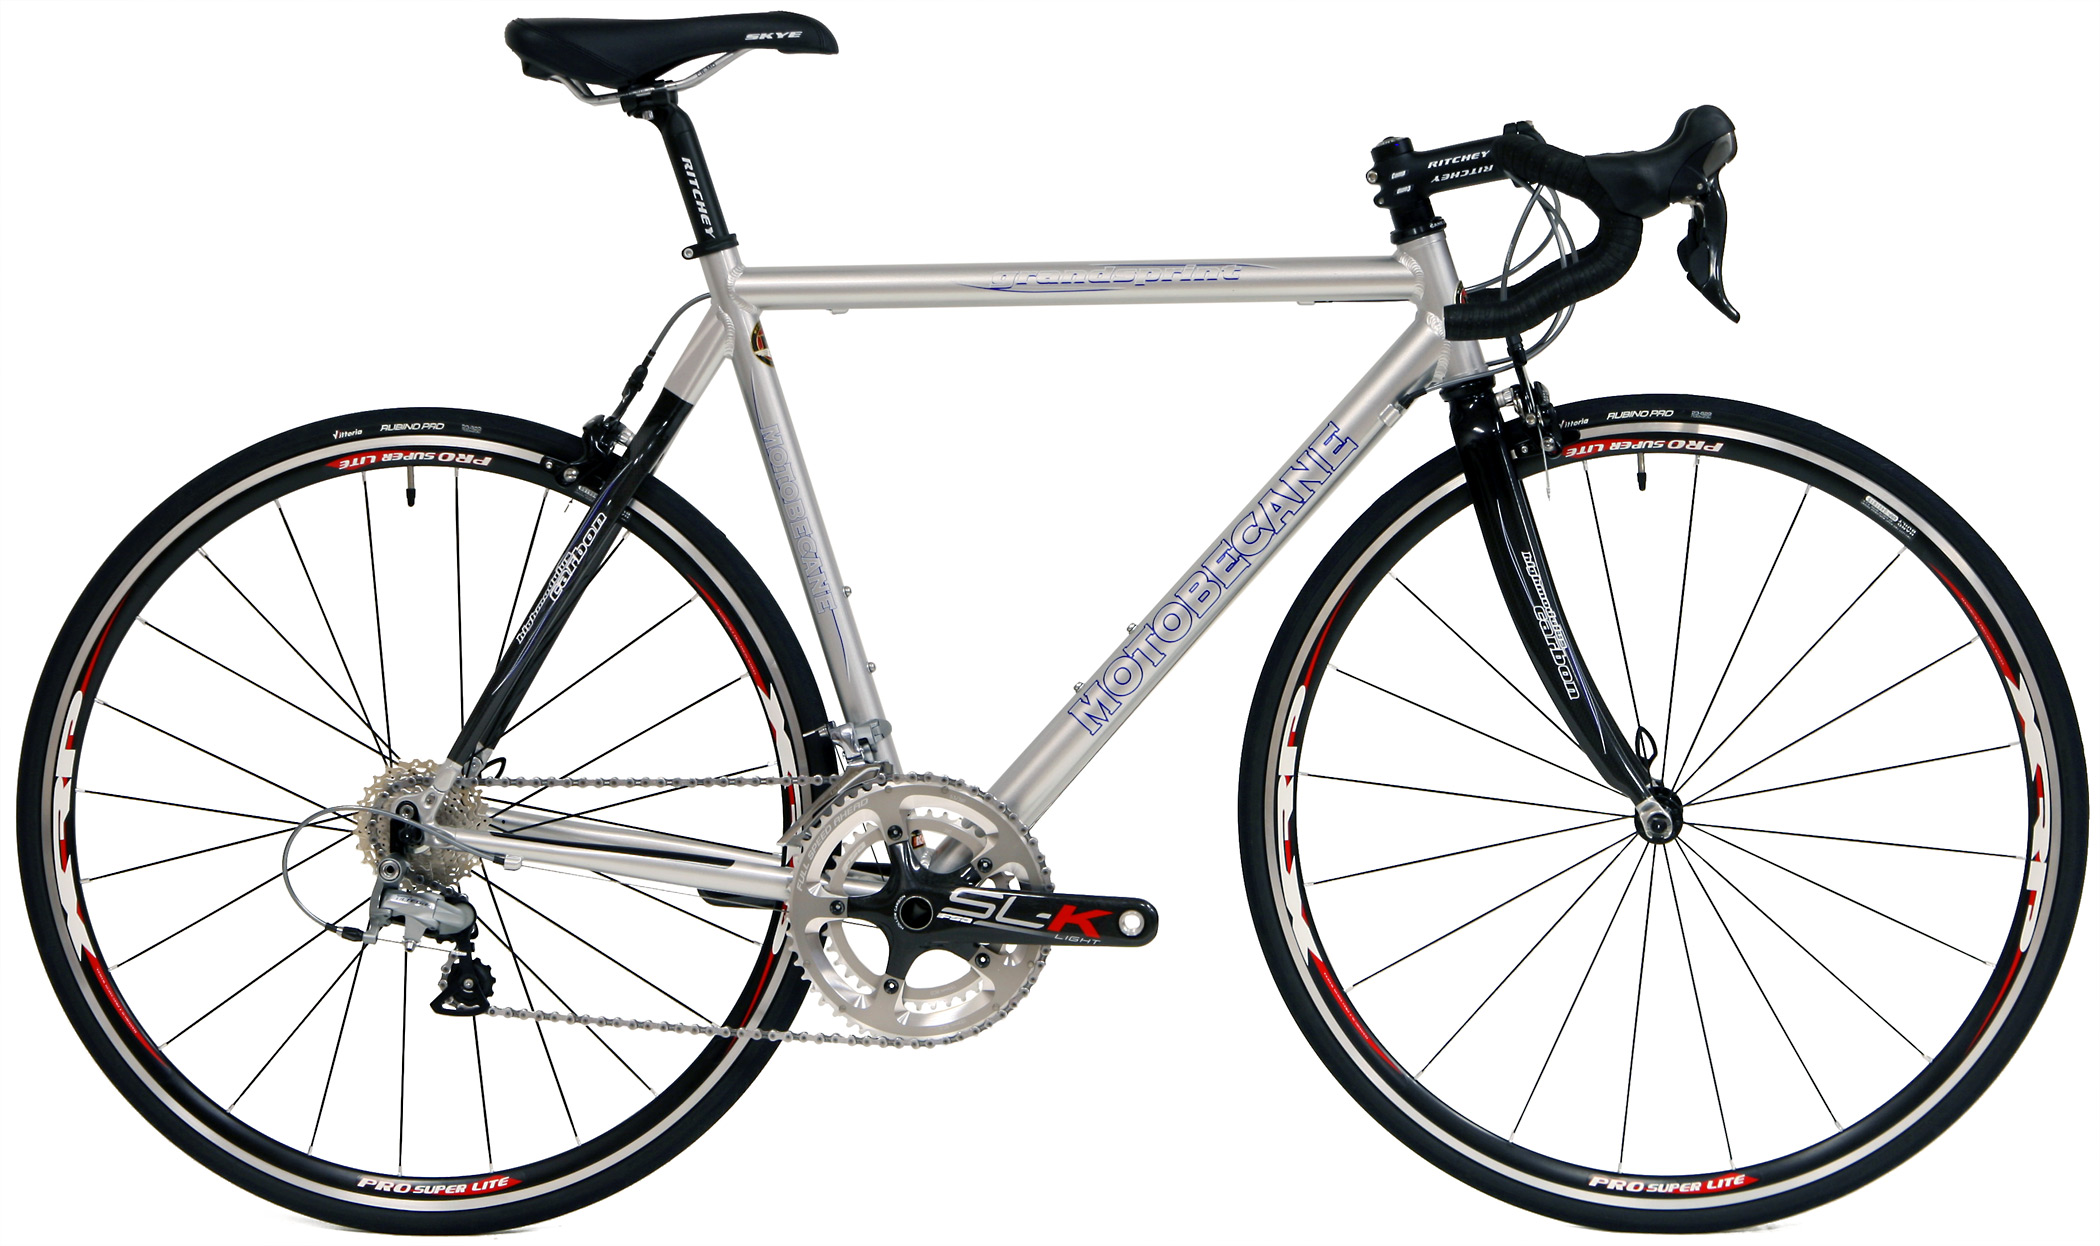 Save up to 60% off new Road Bikes - 2010 Motobecane Grand Sprint2100 x 1246